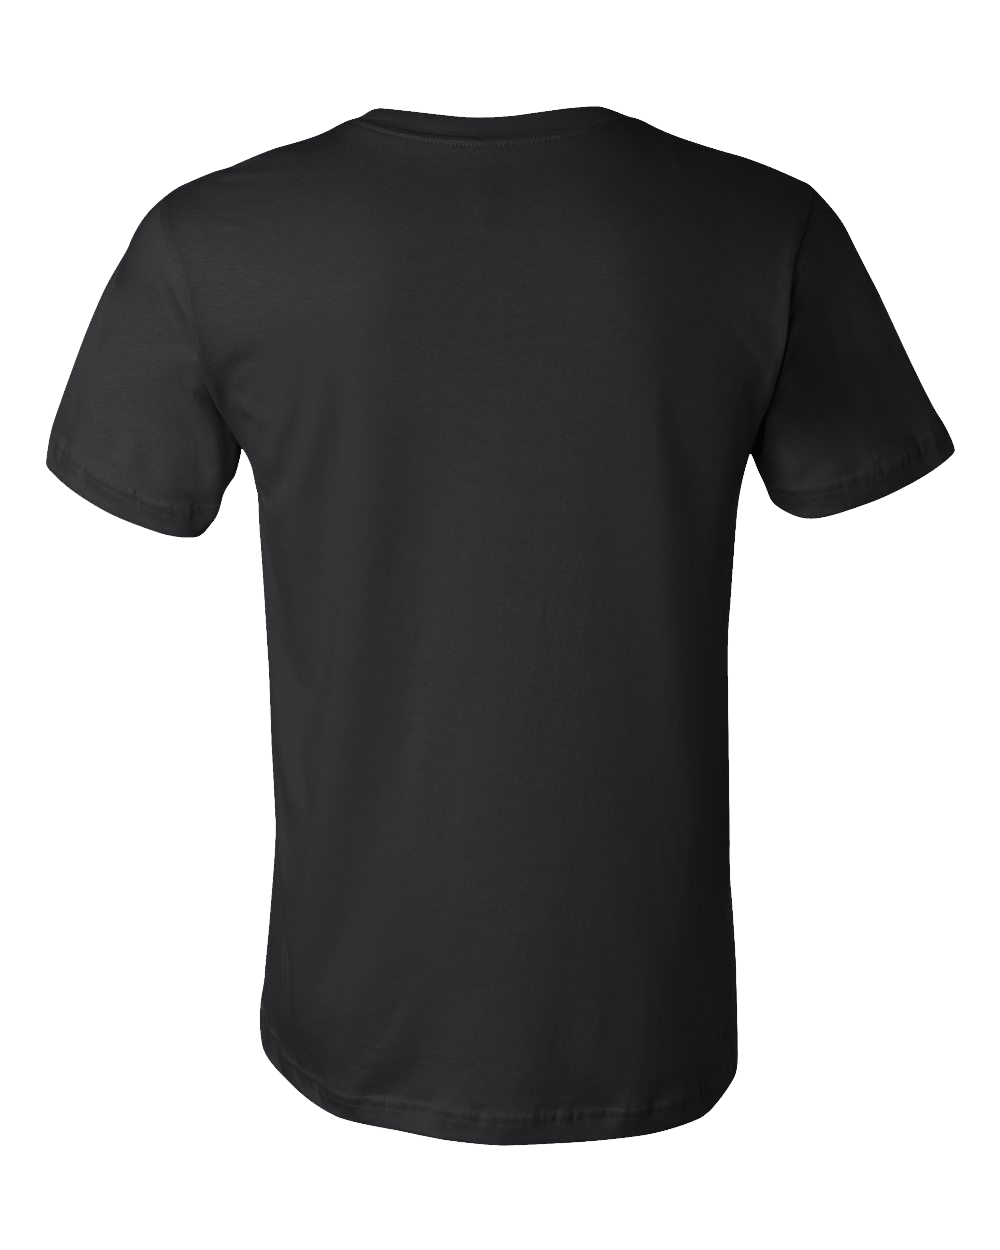 Standard Black Madill, OK | Retro, Vintage Style Oklahoma Pride  T-shirt